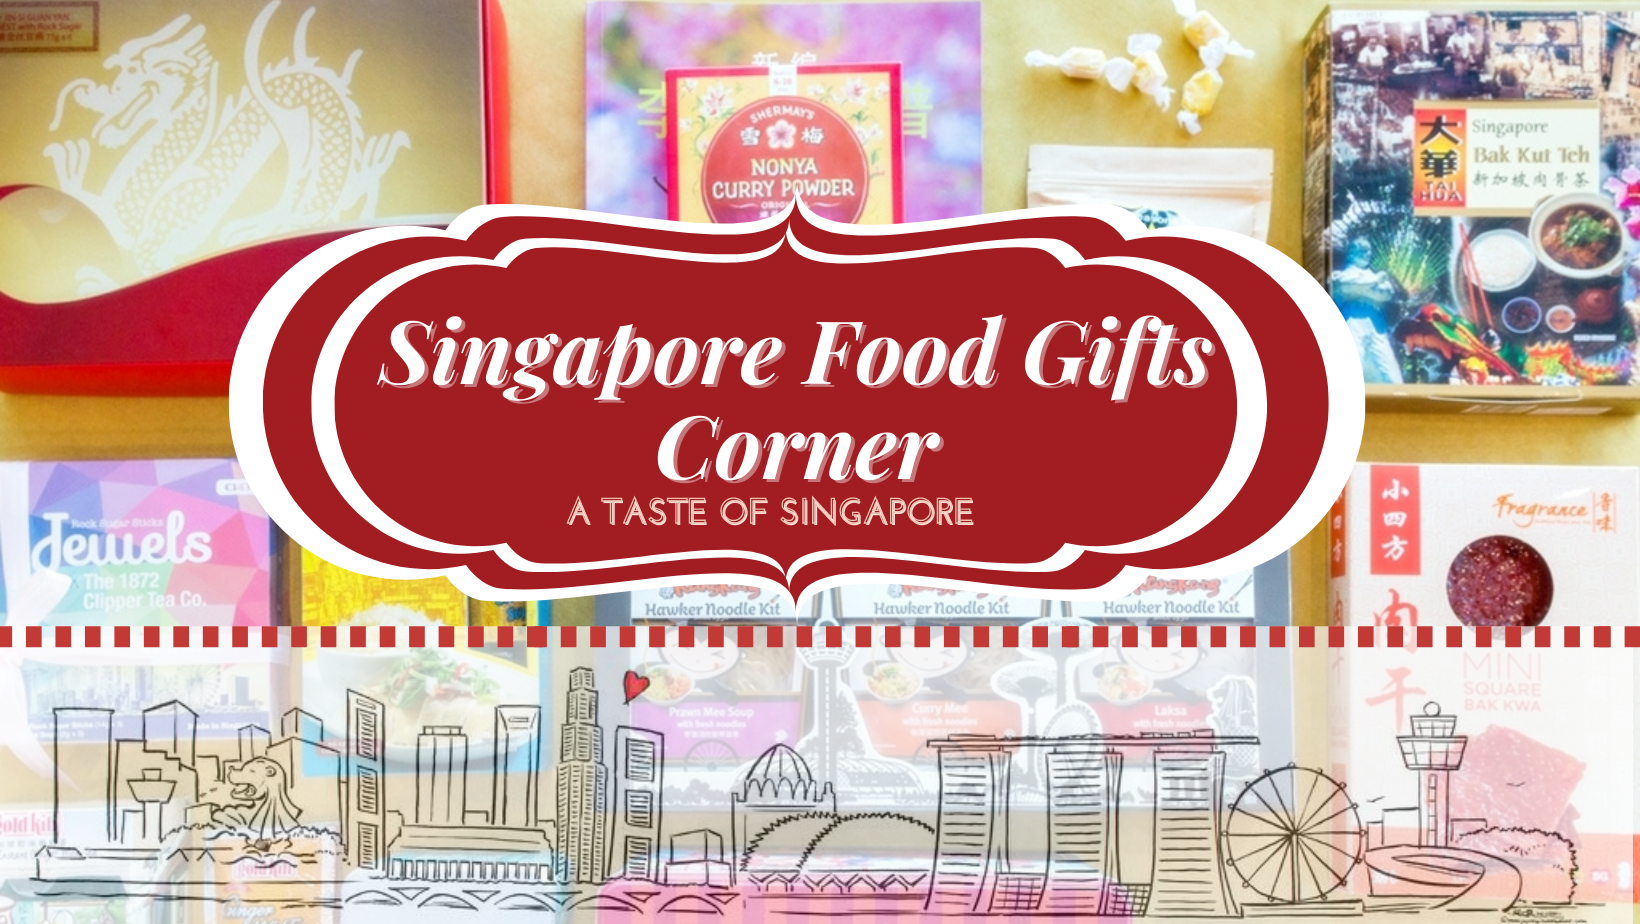 SFU Singapore Food Gifts Corner